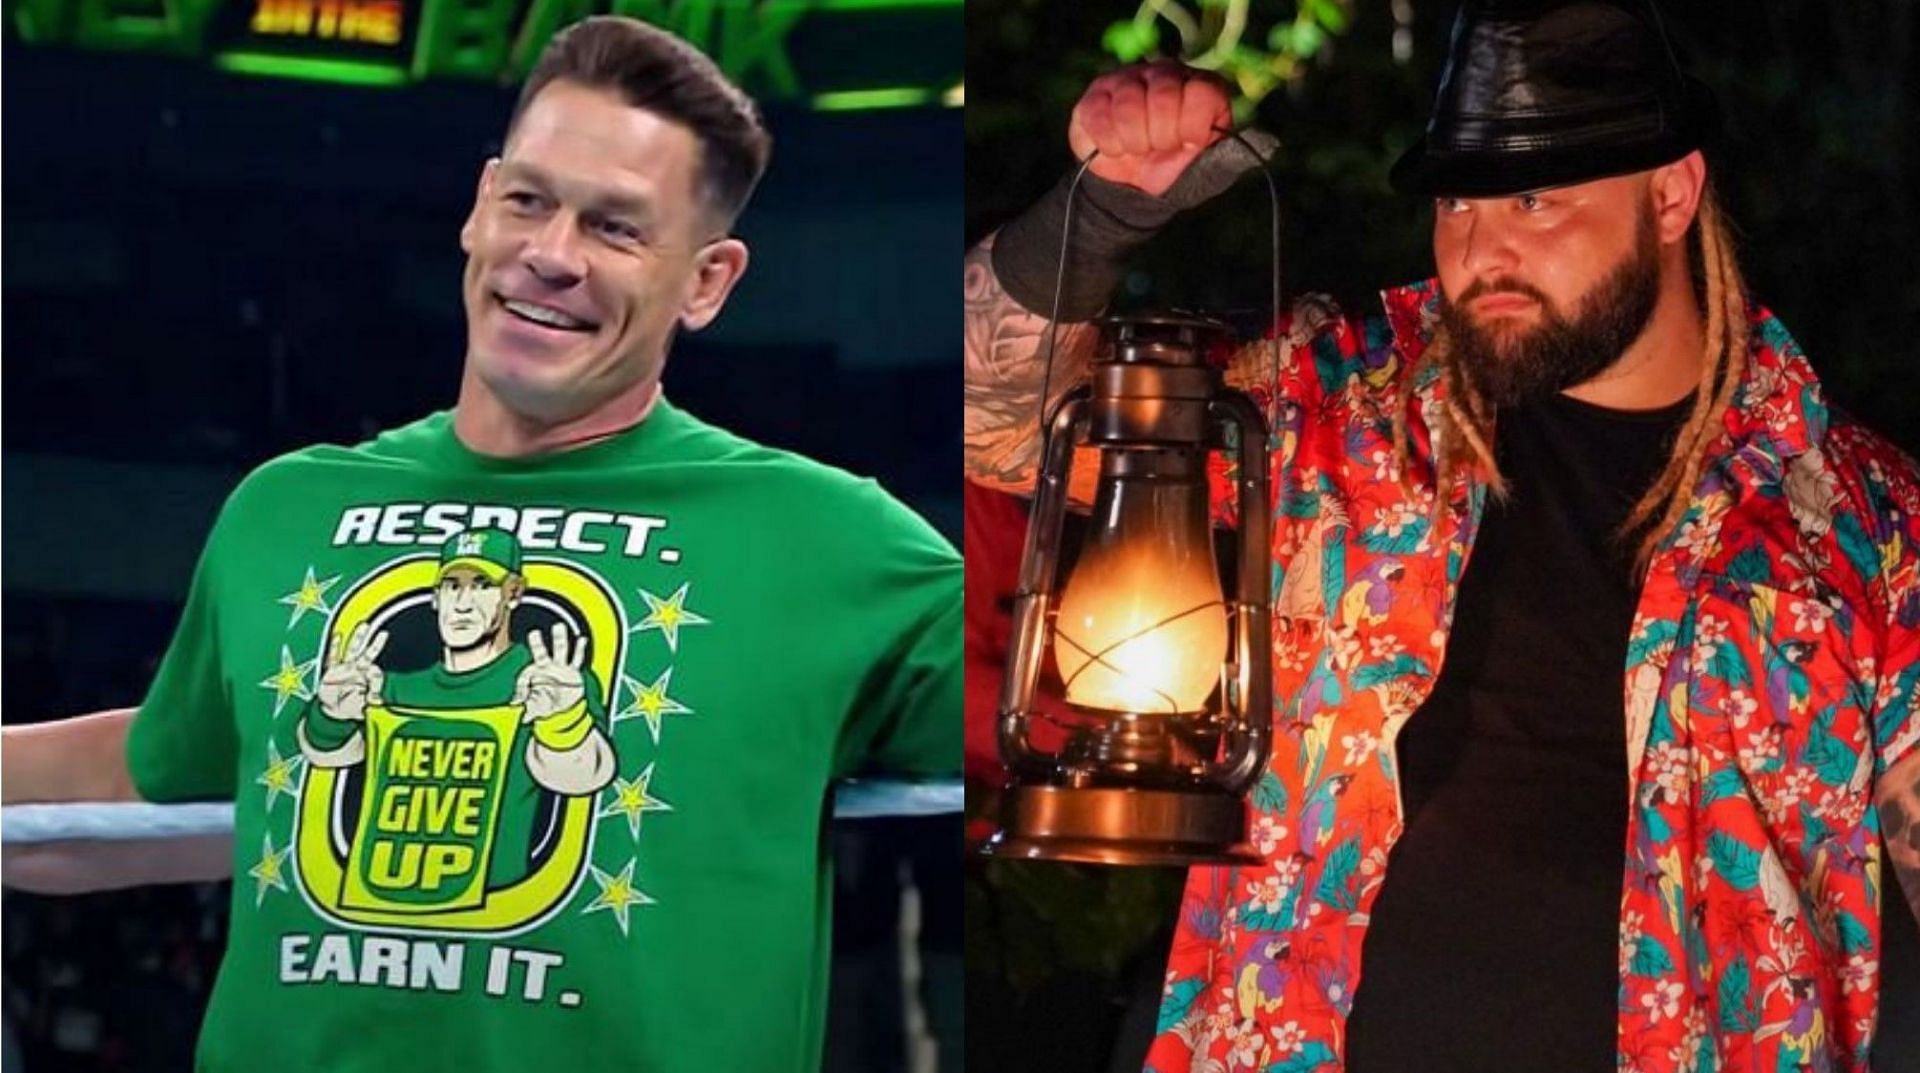 John Cena (left) and Bray Wyatt (right)